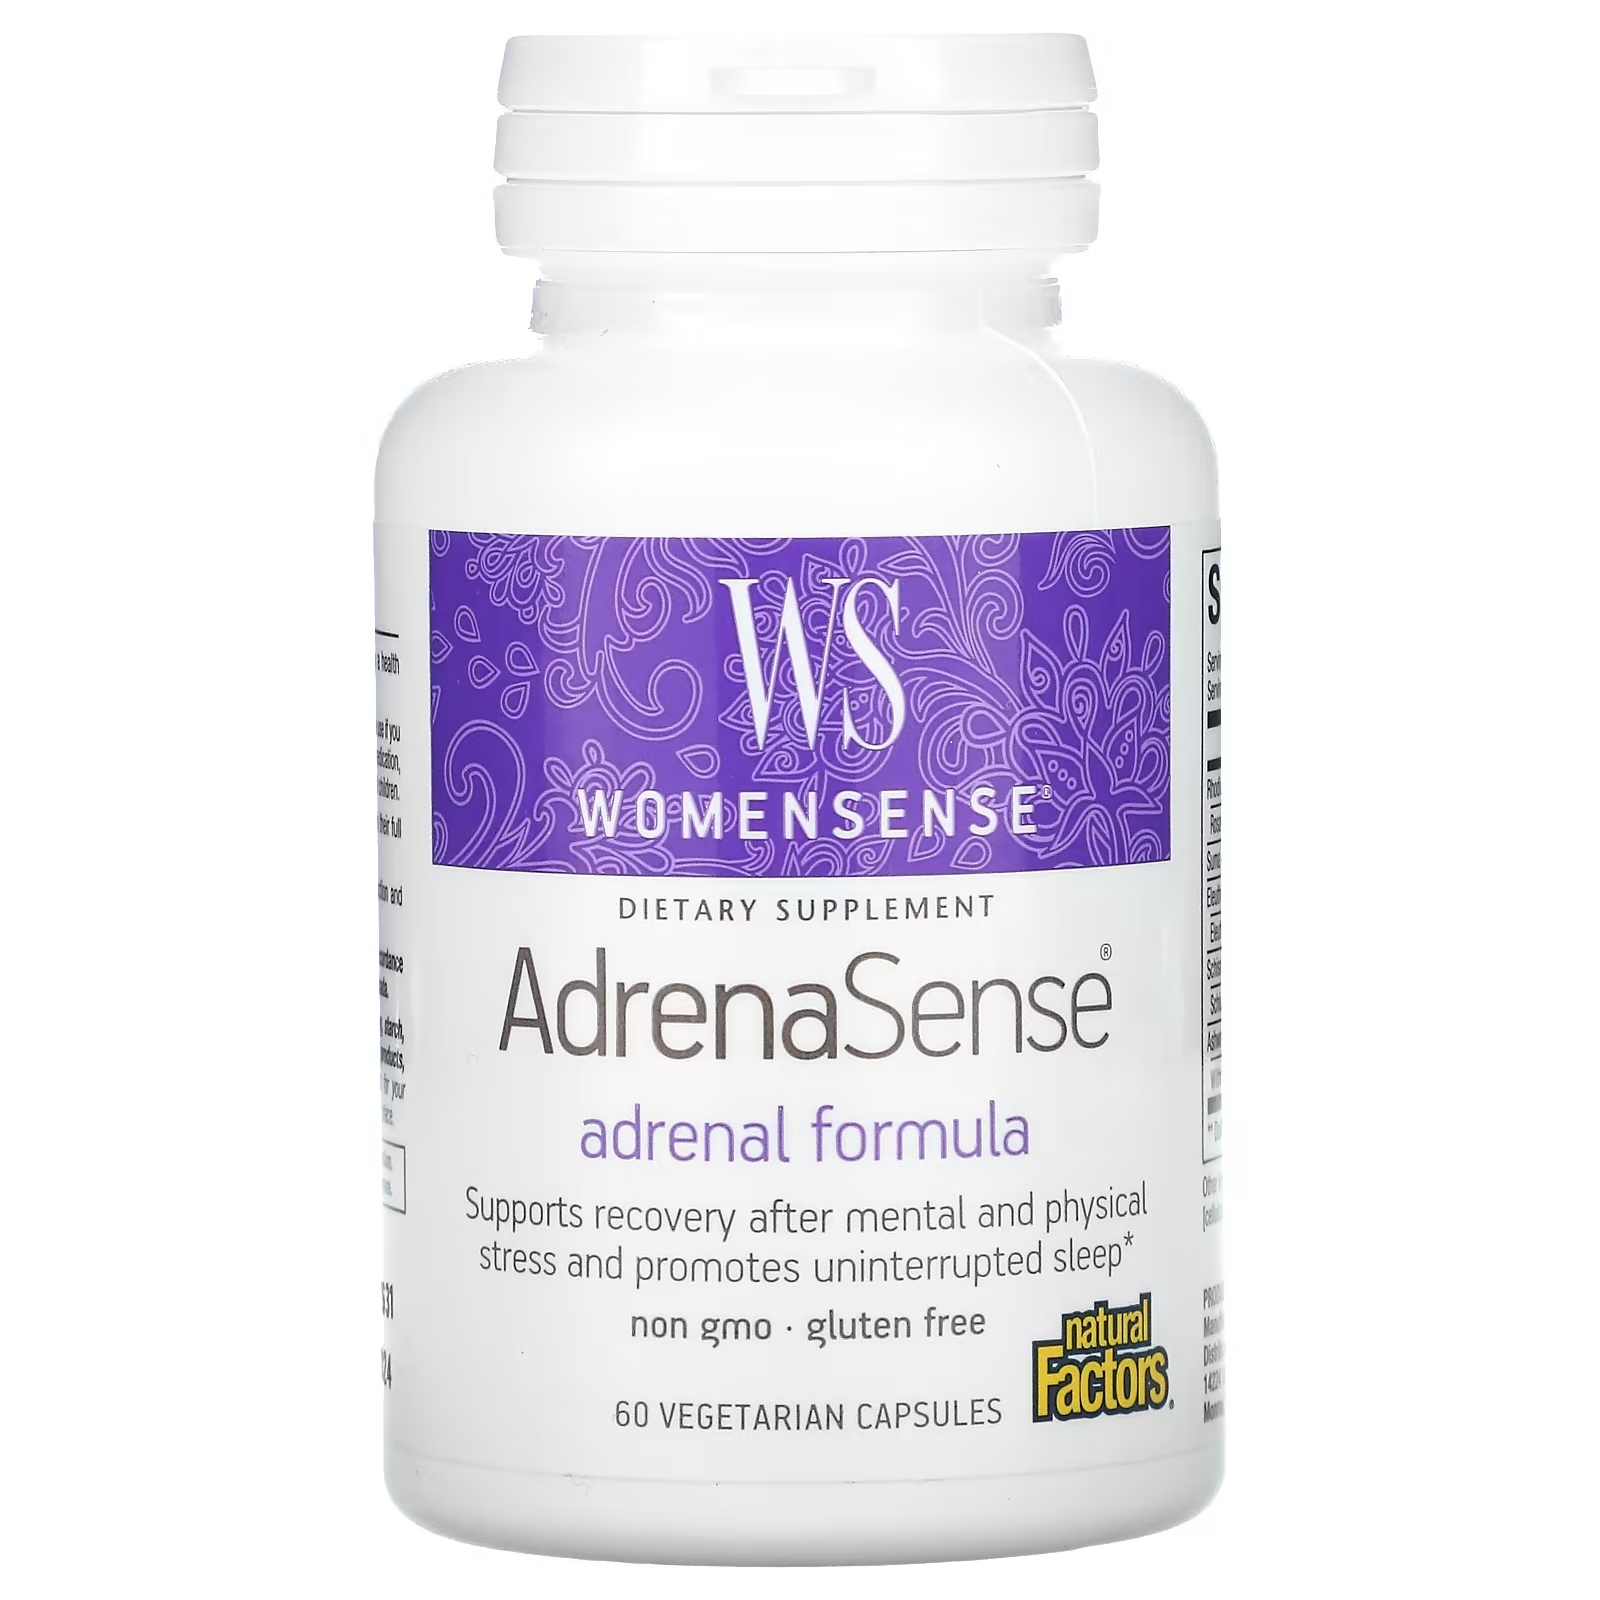 Natural Factors Womensense AdrenaSense, 60 вегетарианских капсул цельнопищевой синбиотик пробиотик natural factors 60 вегетарианских капсул